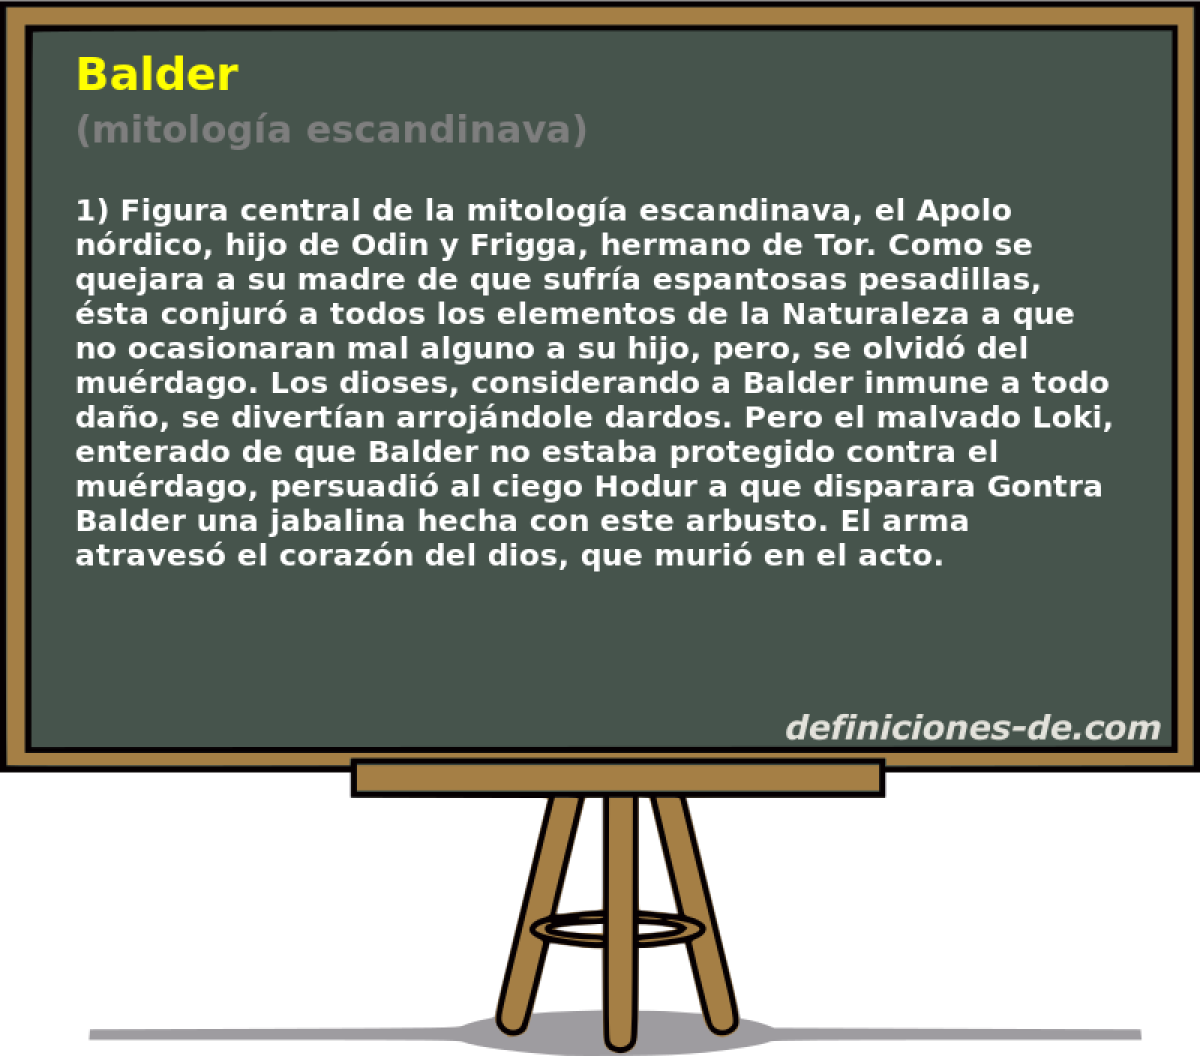 Balder (mitologa escandinava)